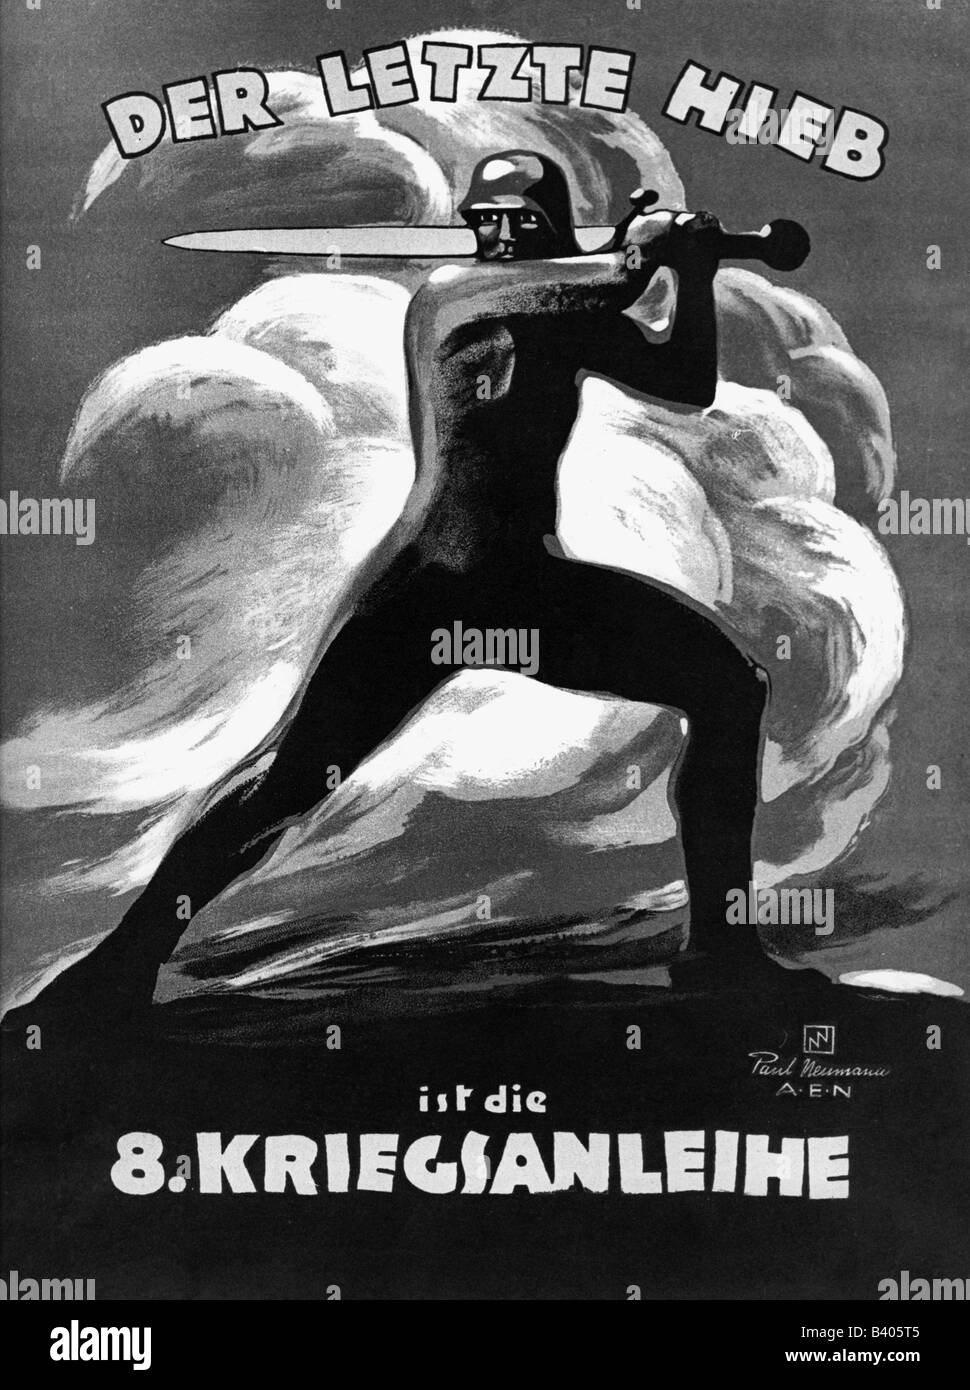 events, First World War / WWI, propaganda, poster 'Der letzte Hieb ist die 8. Kriegsanleihe' (The last blow is the 8th war bond), drawing, by Paul Neumann, Nuremberg, Germany, 1918, Stock Photo